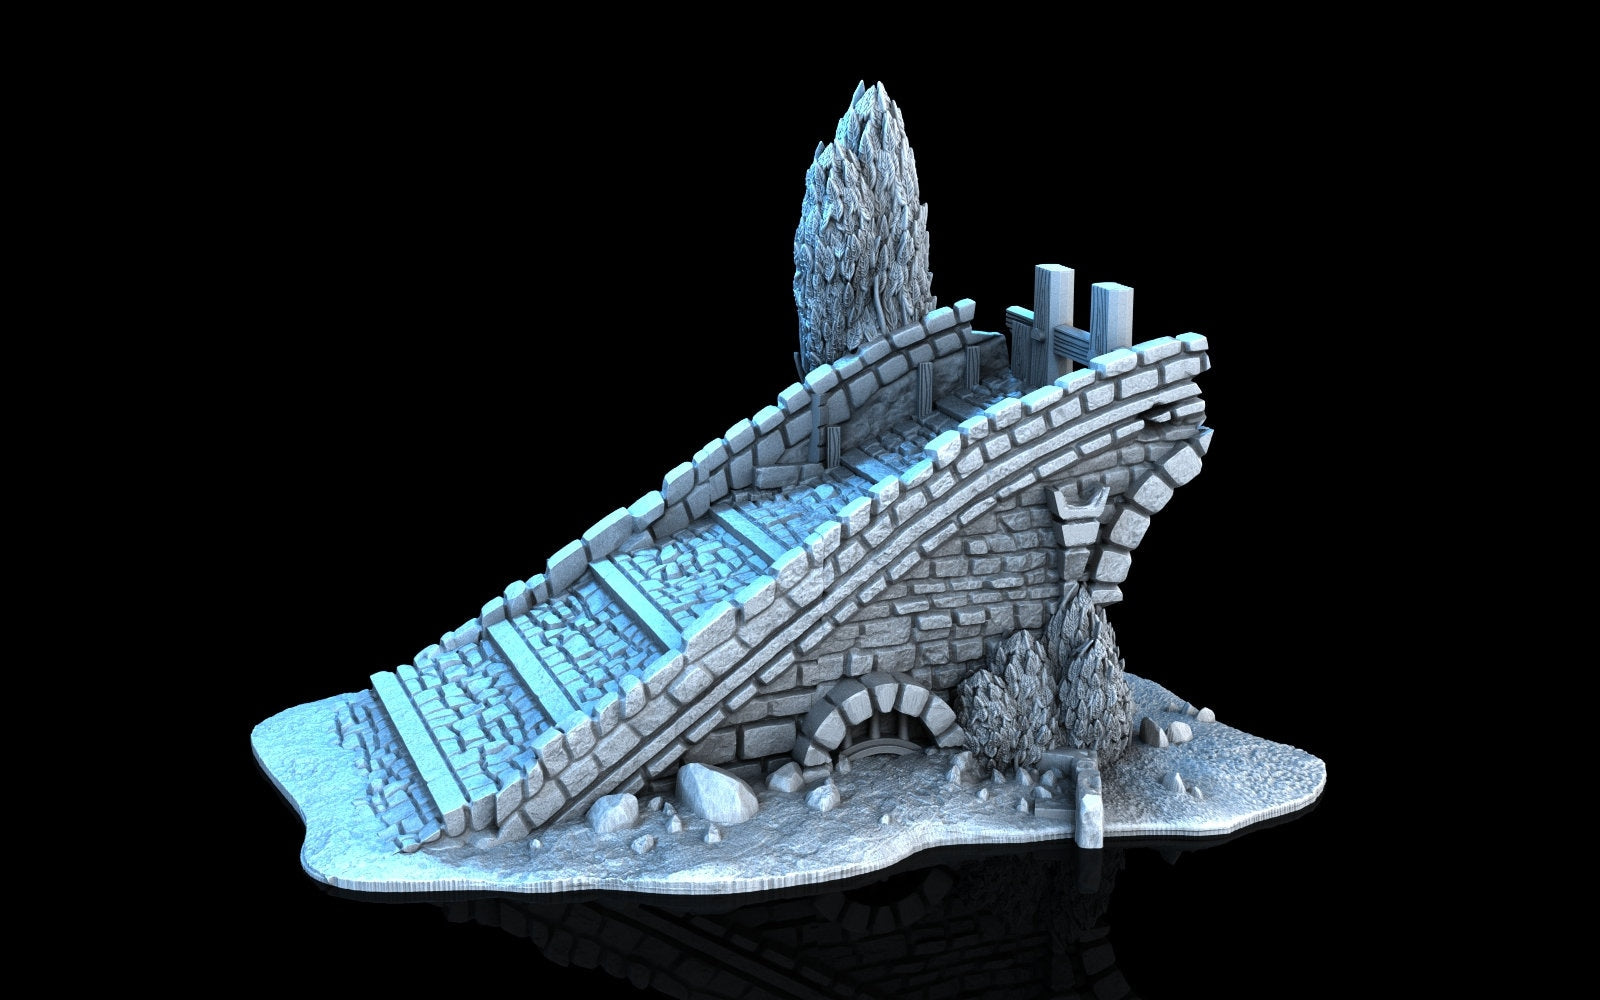 Bridge Half - 3DP4U Medieval Town | Miniature | Wargaming | Roleplaying Games | 32mm | Ruin | Playable | Filament | 3d printed